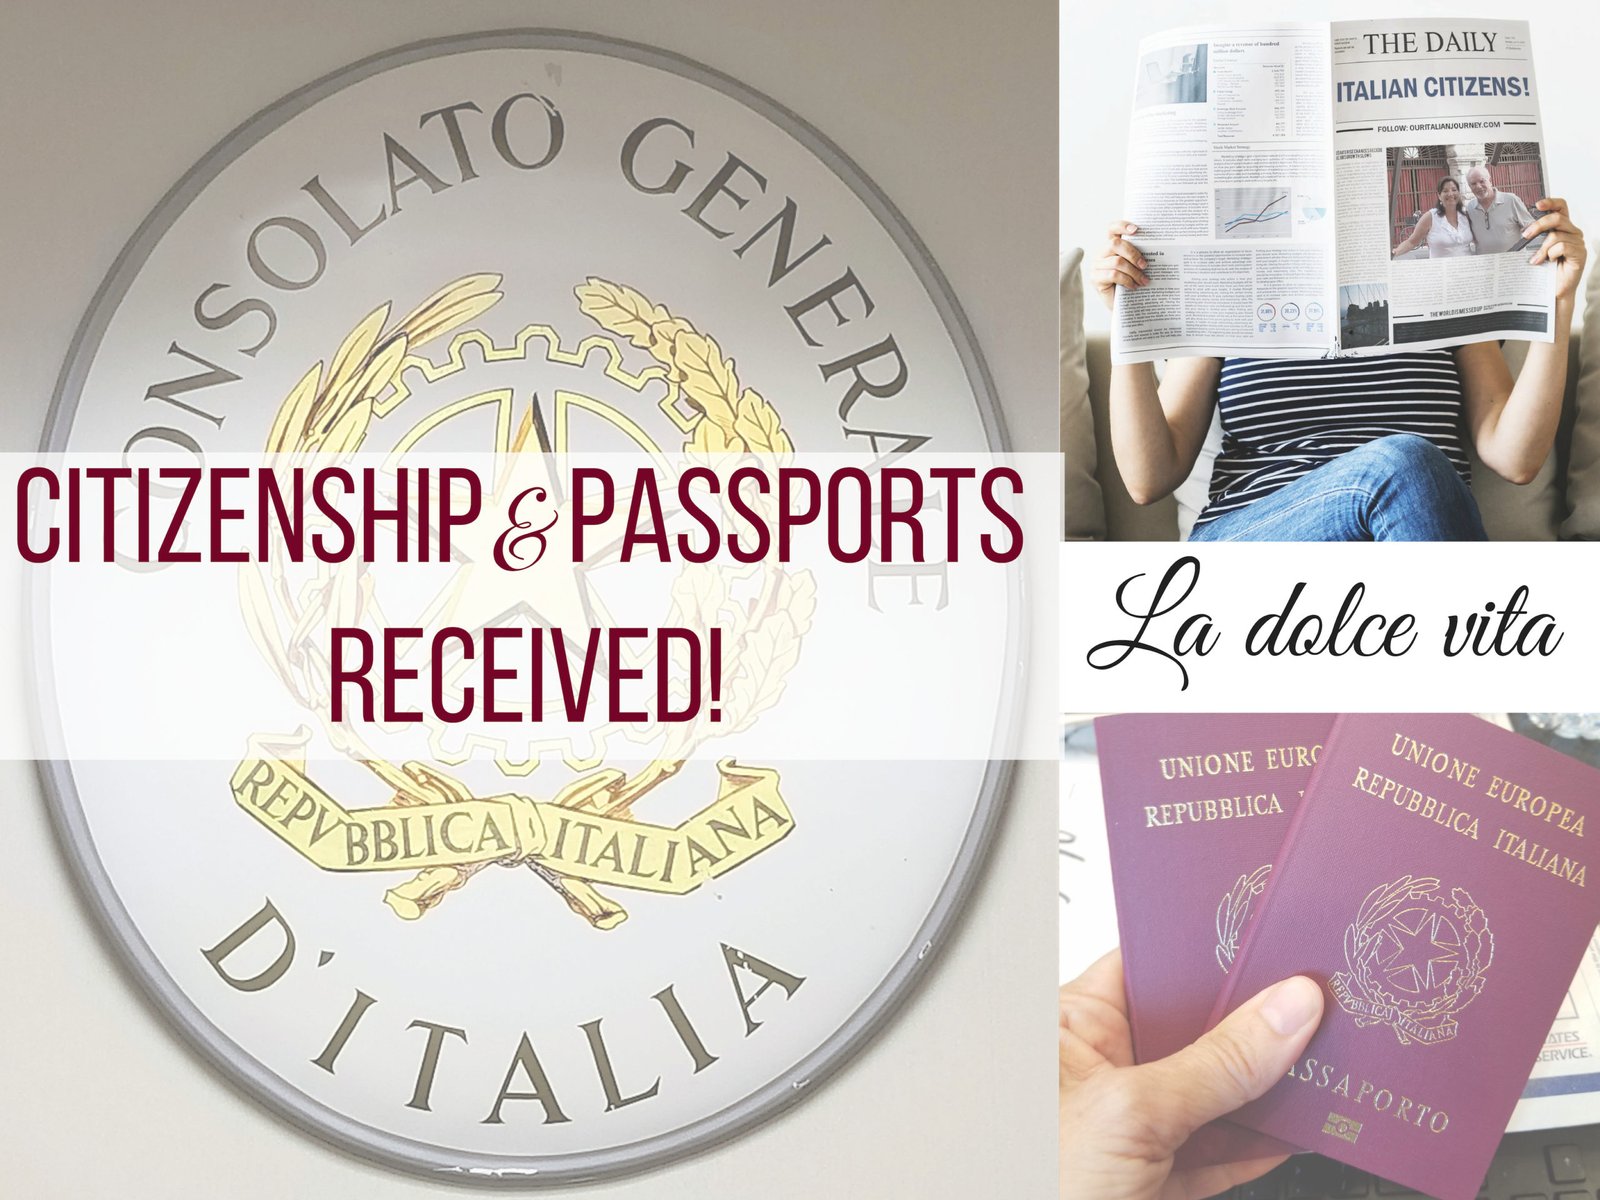 citizenship and passports received, ouritalianjourney.com